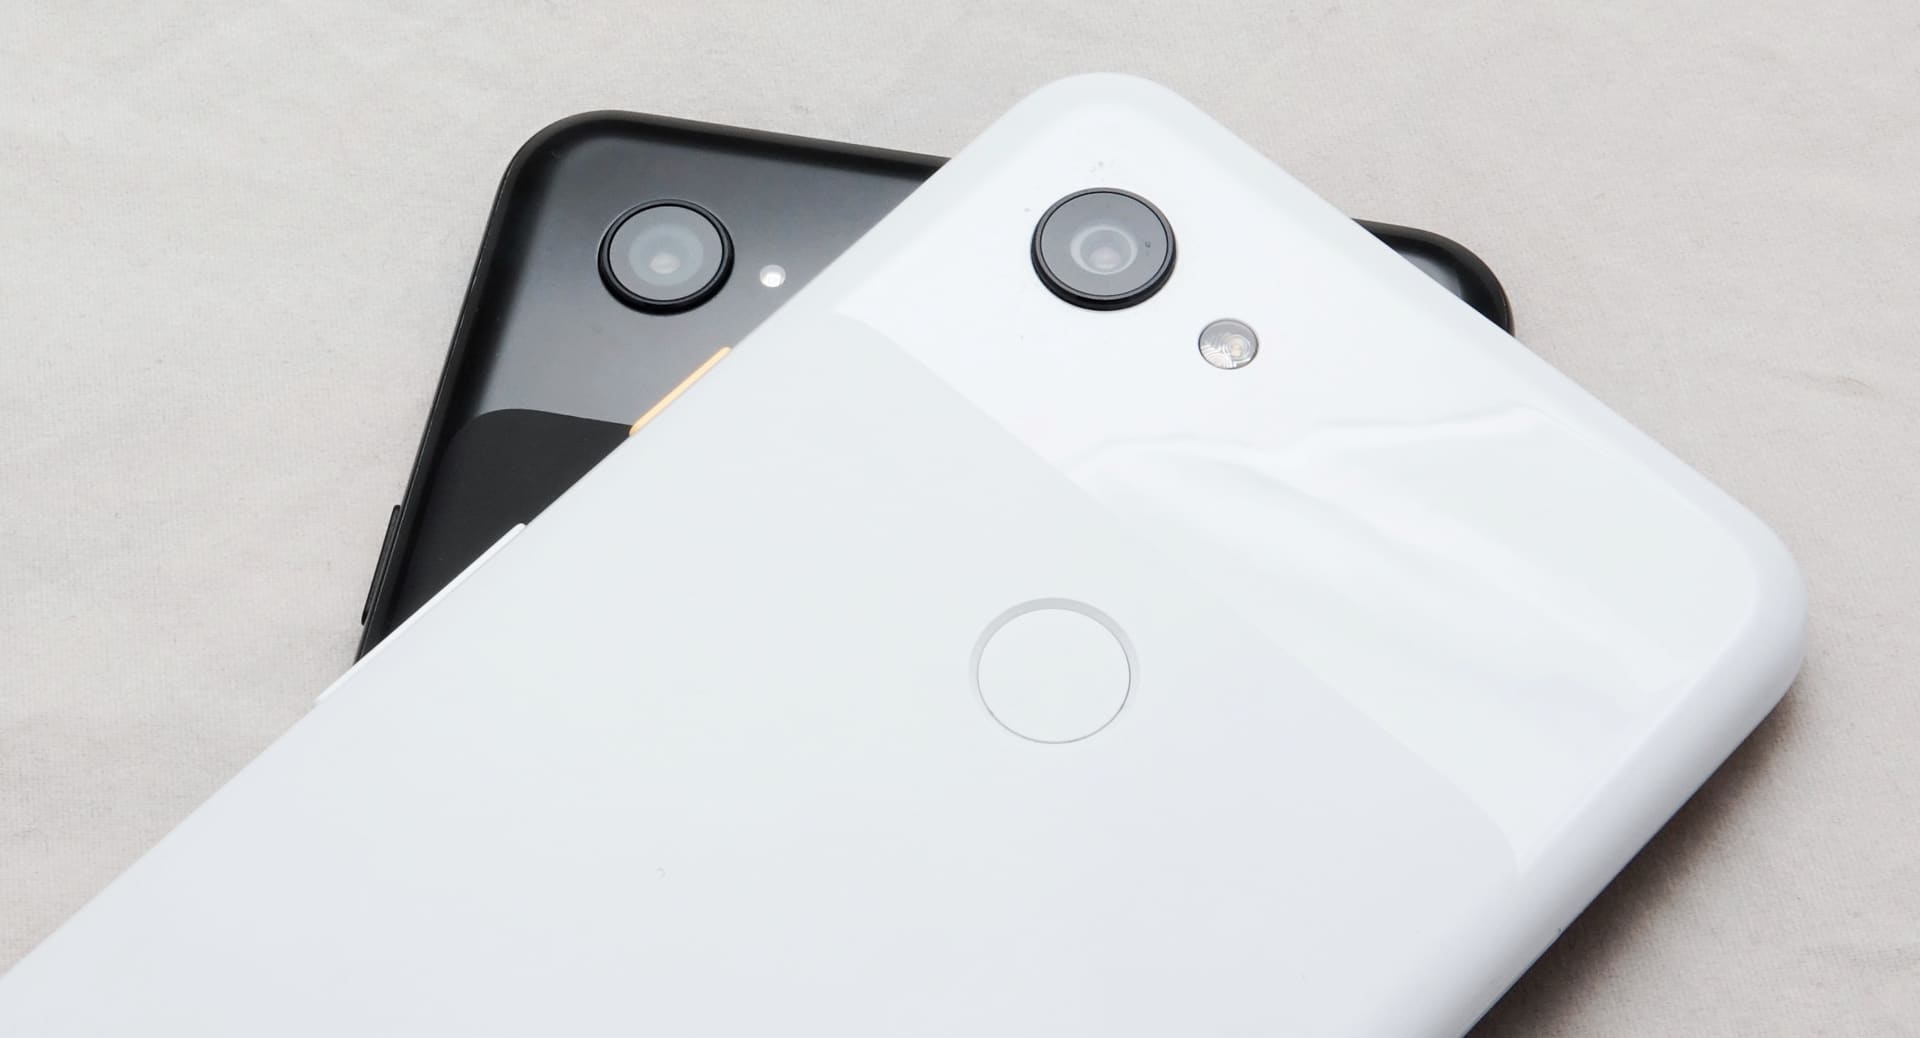 Google Pixel 3a camera on top the Pixel 3 camera